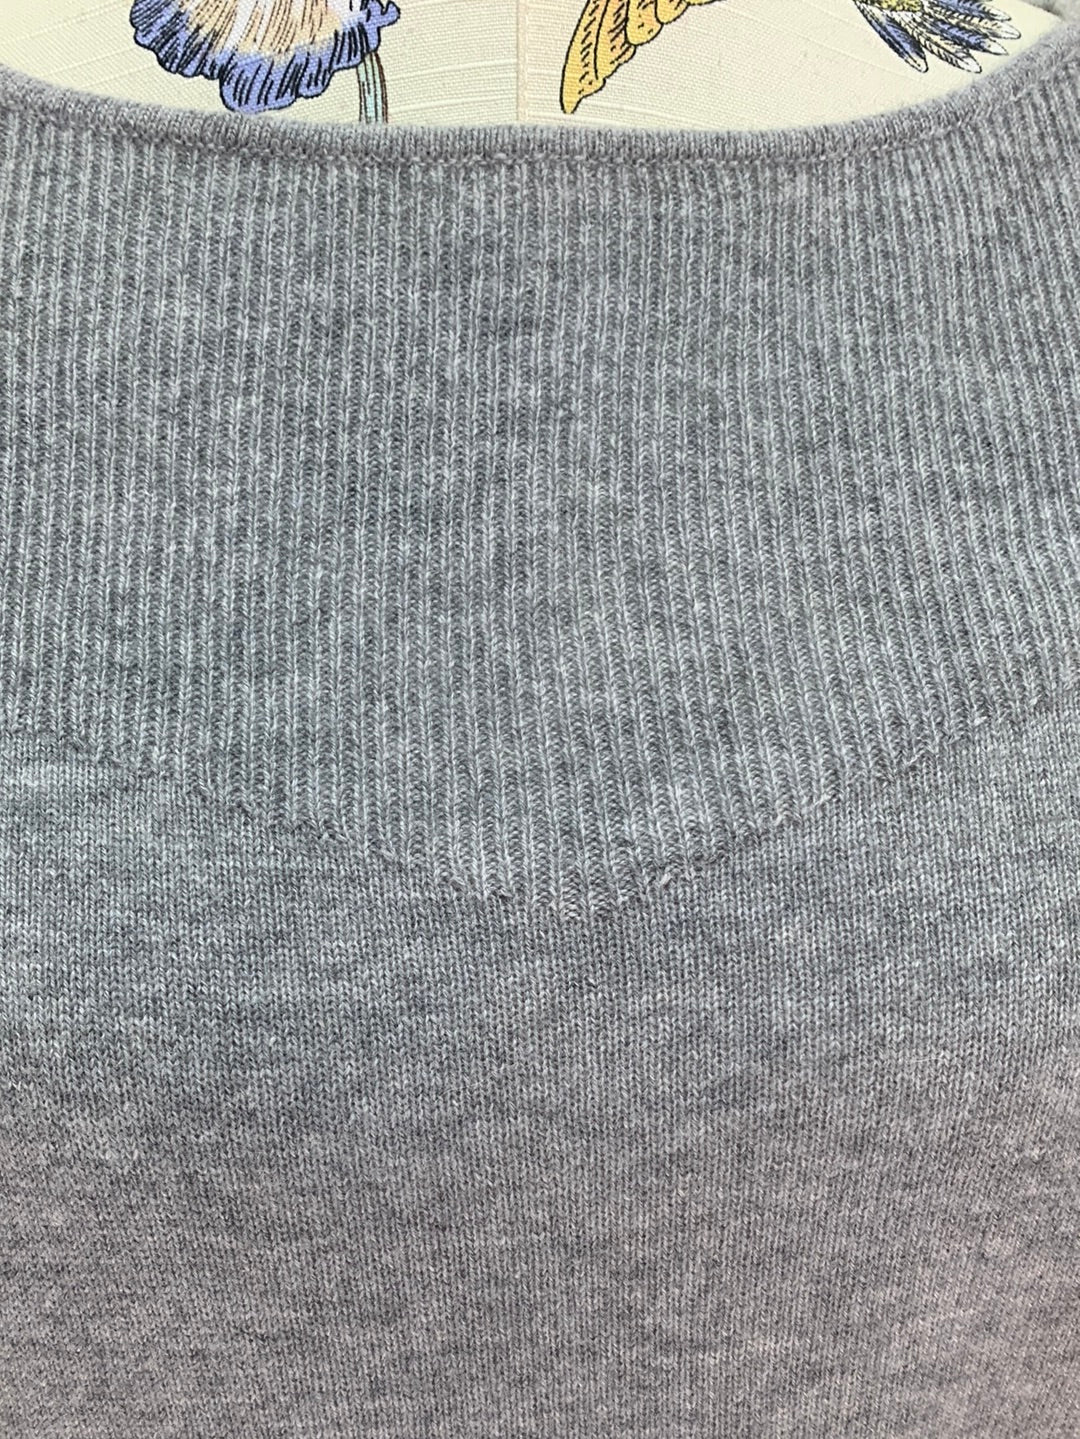 TALBOTS grey Cashmere 3/4 Sleeve Sweater - M